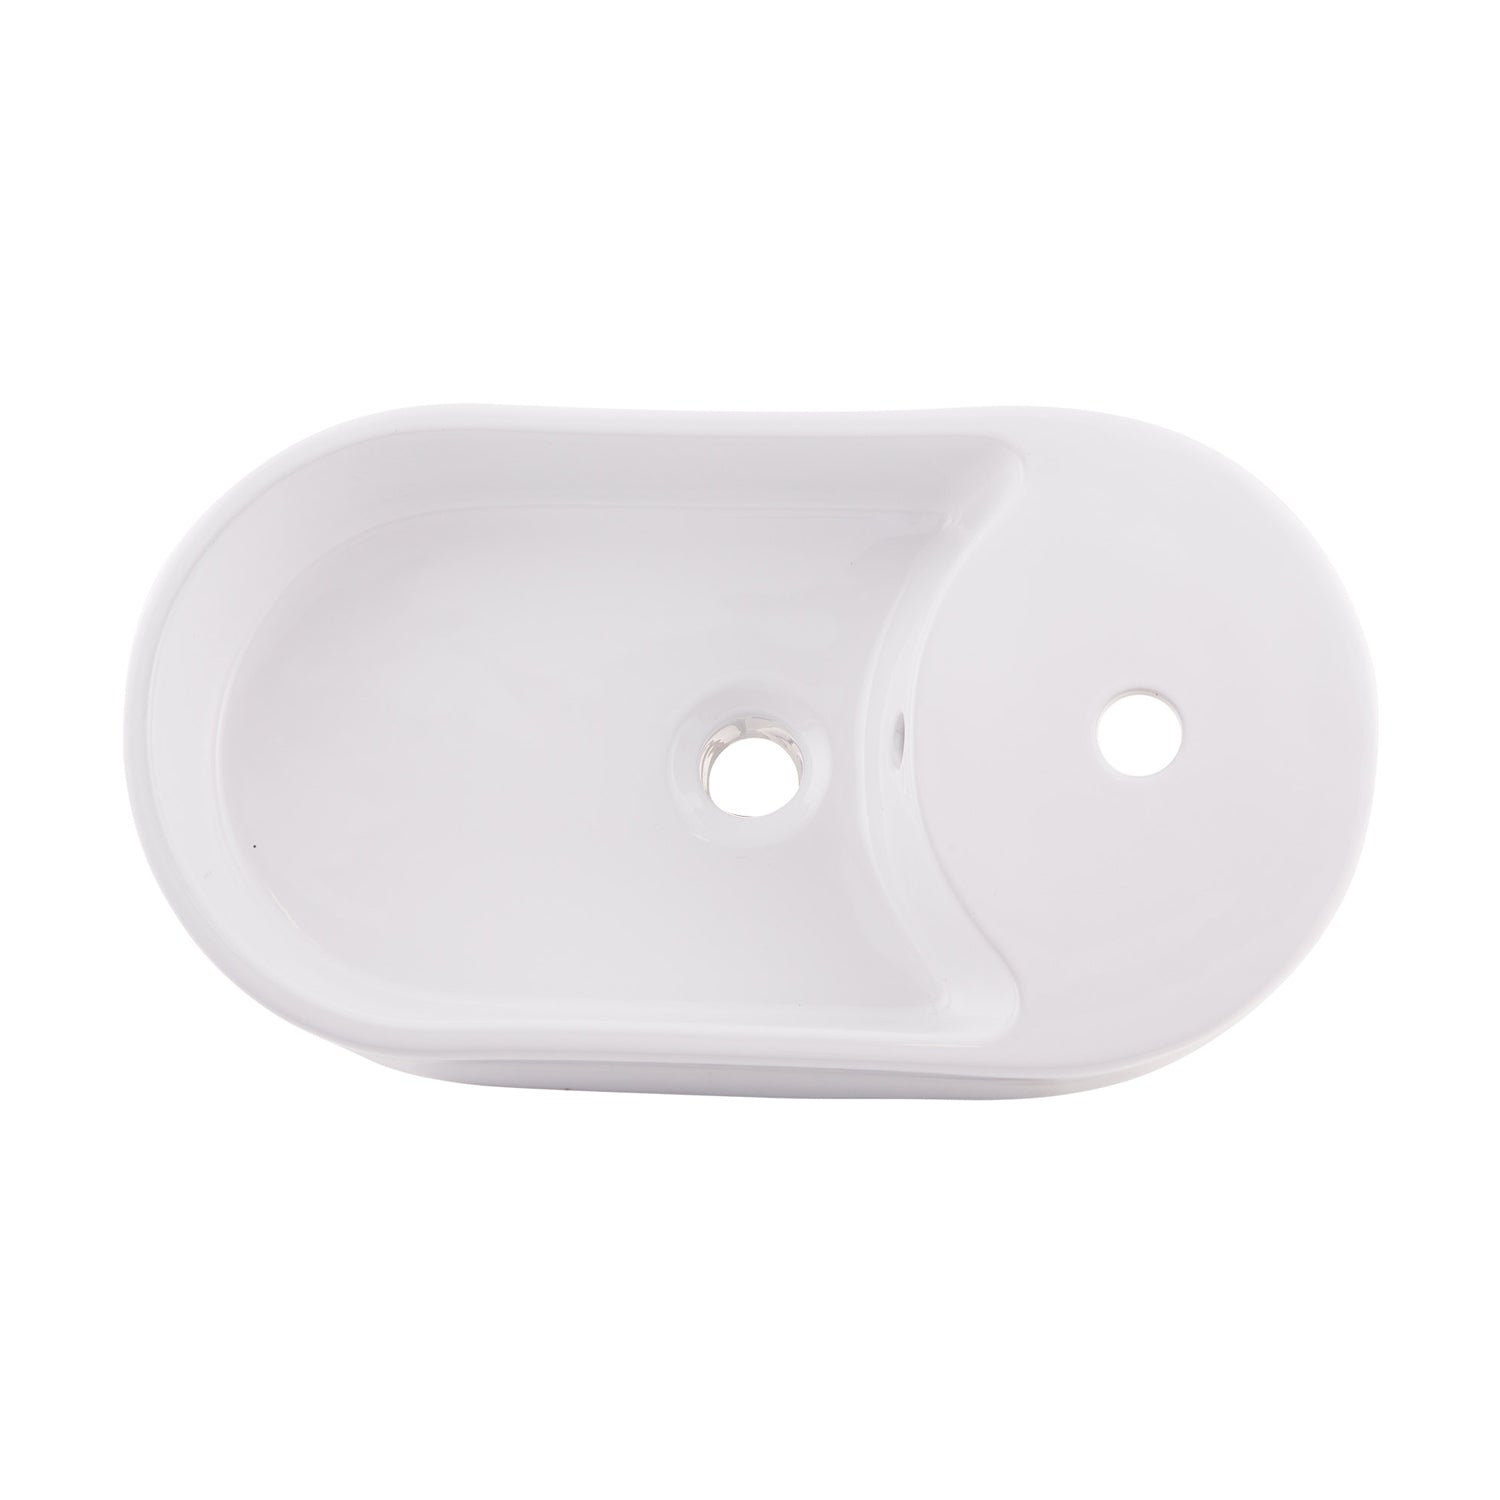 DAX Ceramic Oval Single Bowl Bathroom Vessel Sink, White Finish,  21-1/2 x 5 x 11-3/4 Inches (BSN-224)